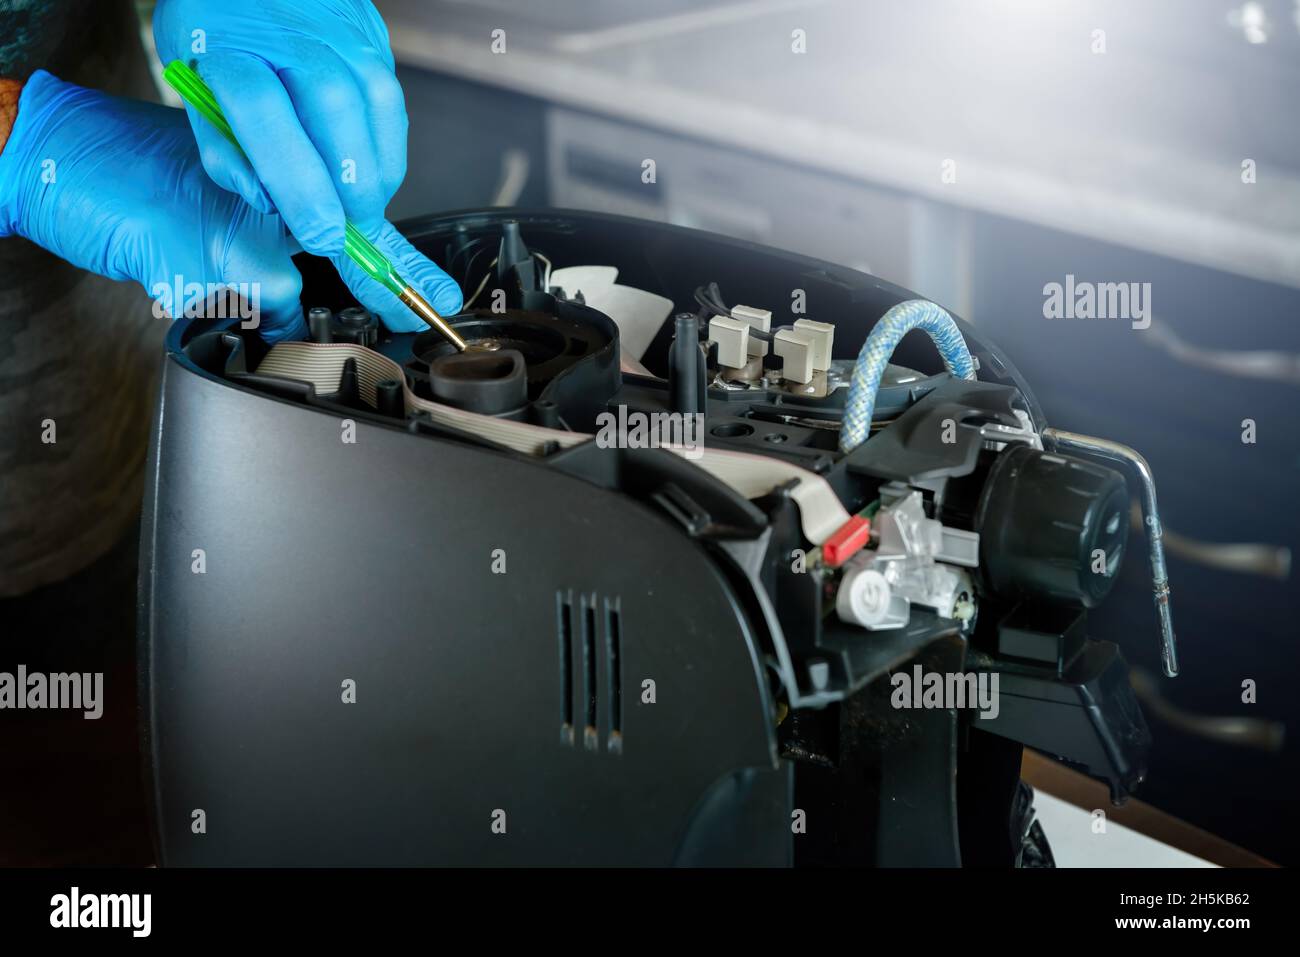 A repairman fixes a broken coffee maker, repair of household appliances Stock Photo